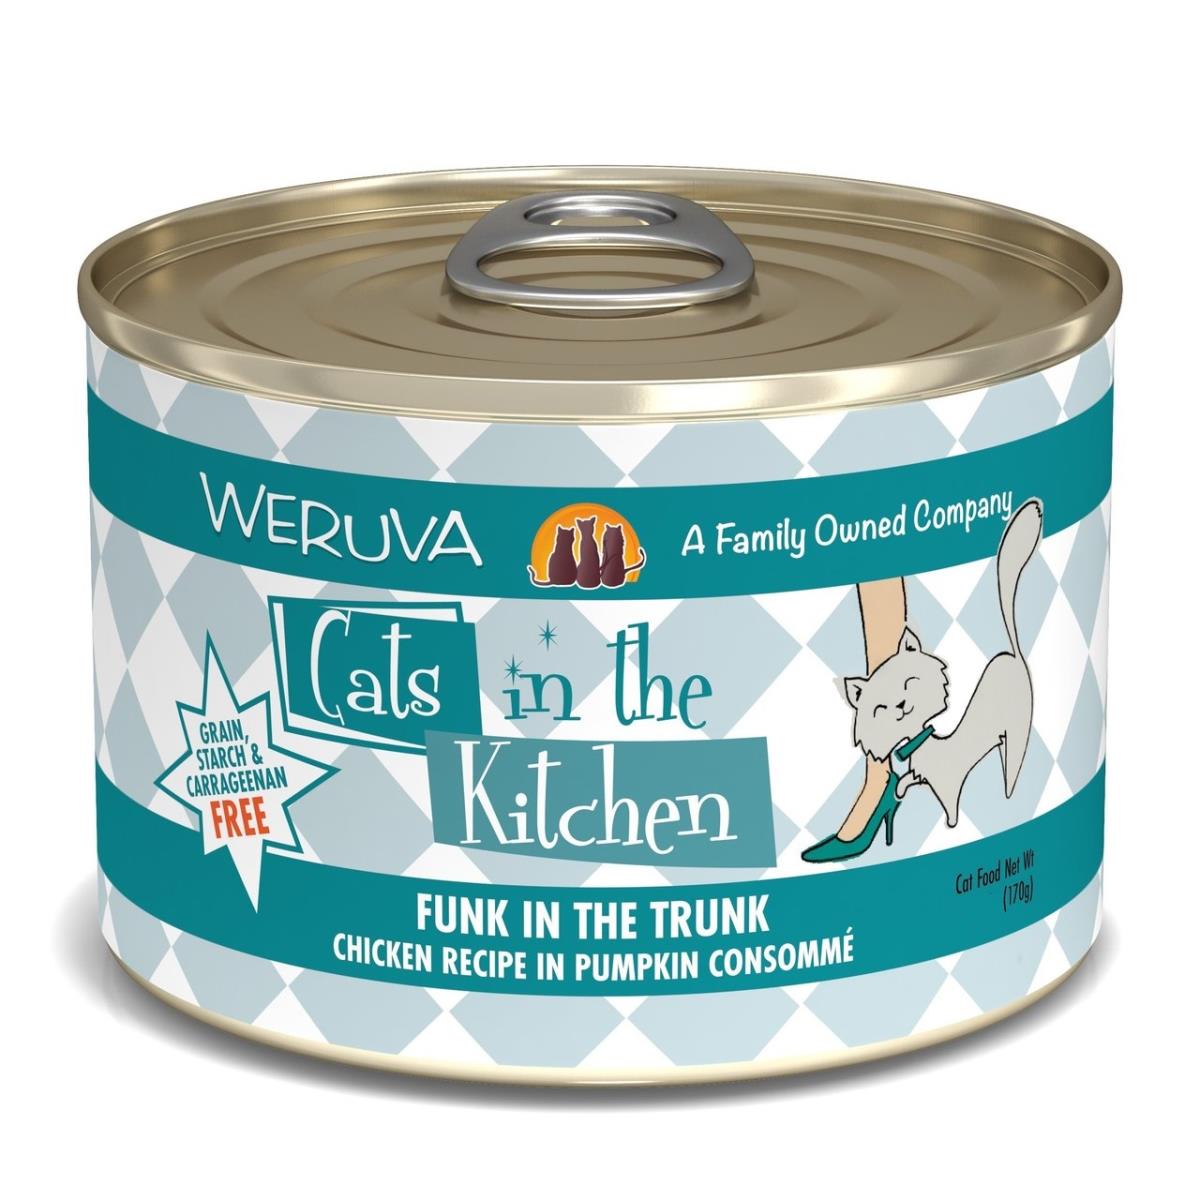 Wu00168 10 Oz The Kitchen Funk In Trunk Cat Food - Case Of 12